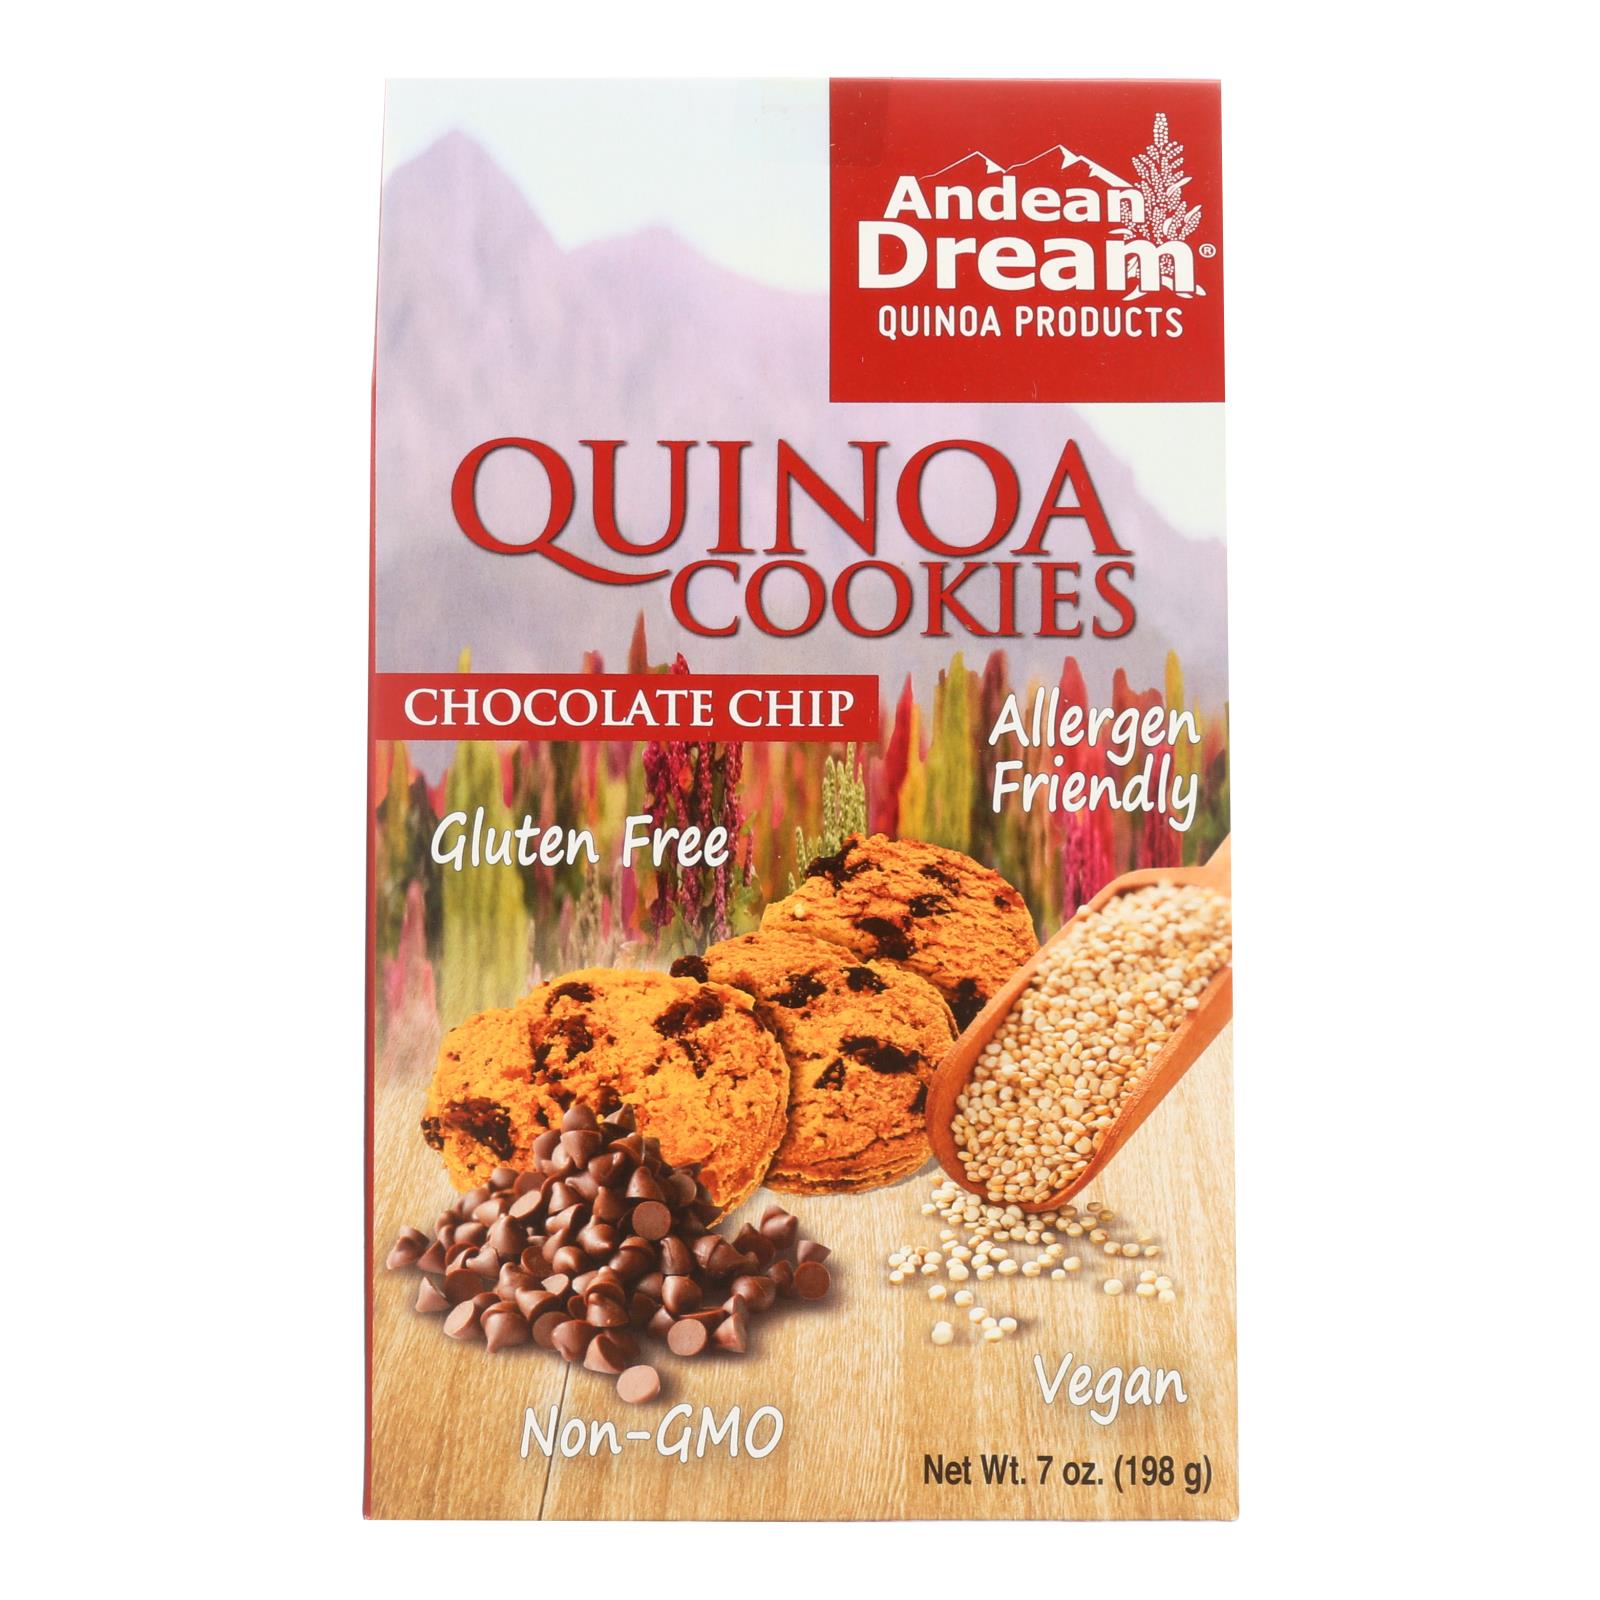 Andean Dream, Andean Dream Gluten Free Quinoa Cookies Chocolate Chip - Case of 6 - 7 oz.